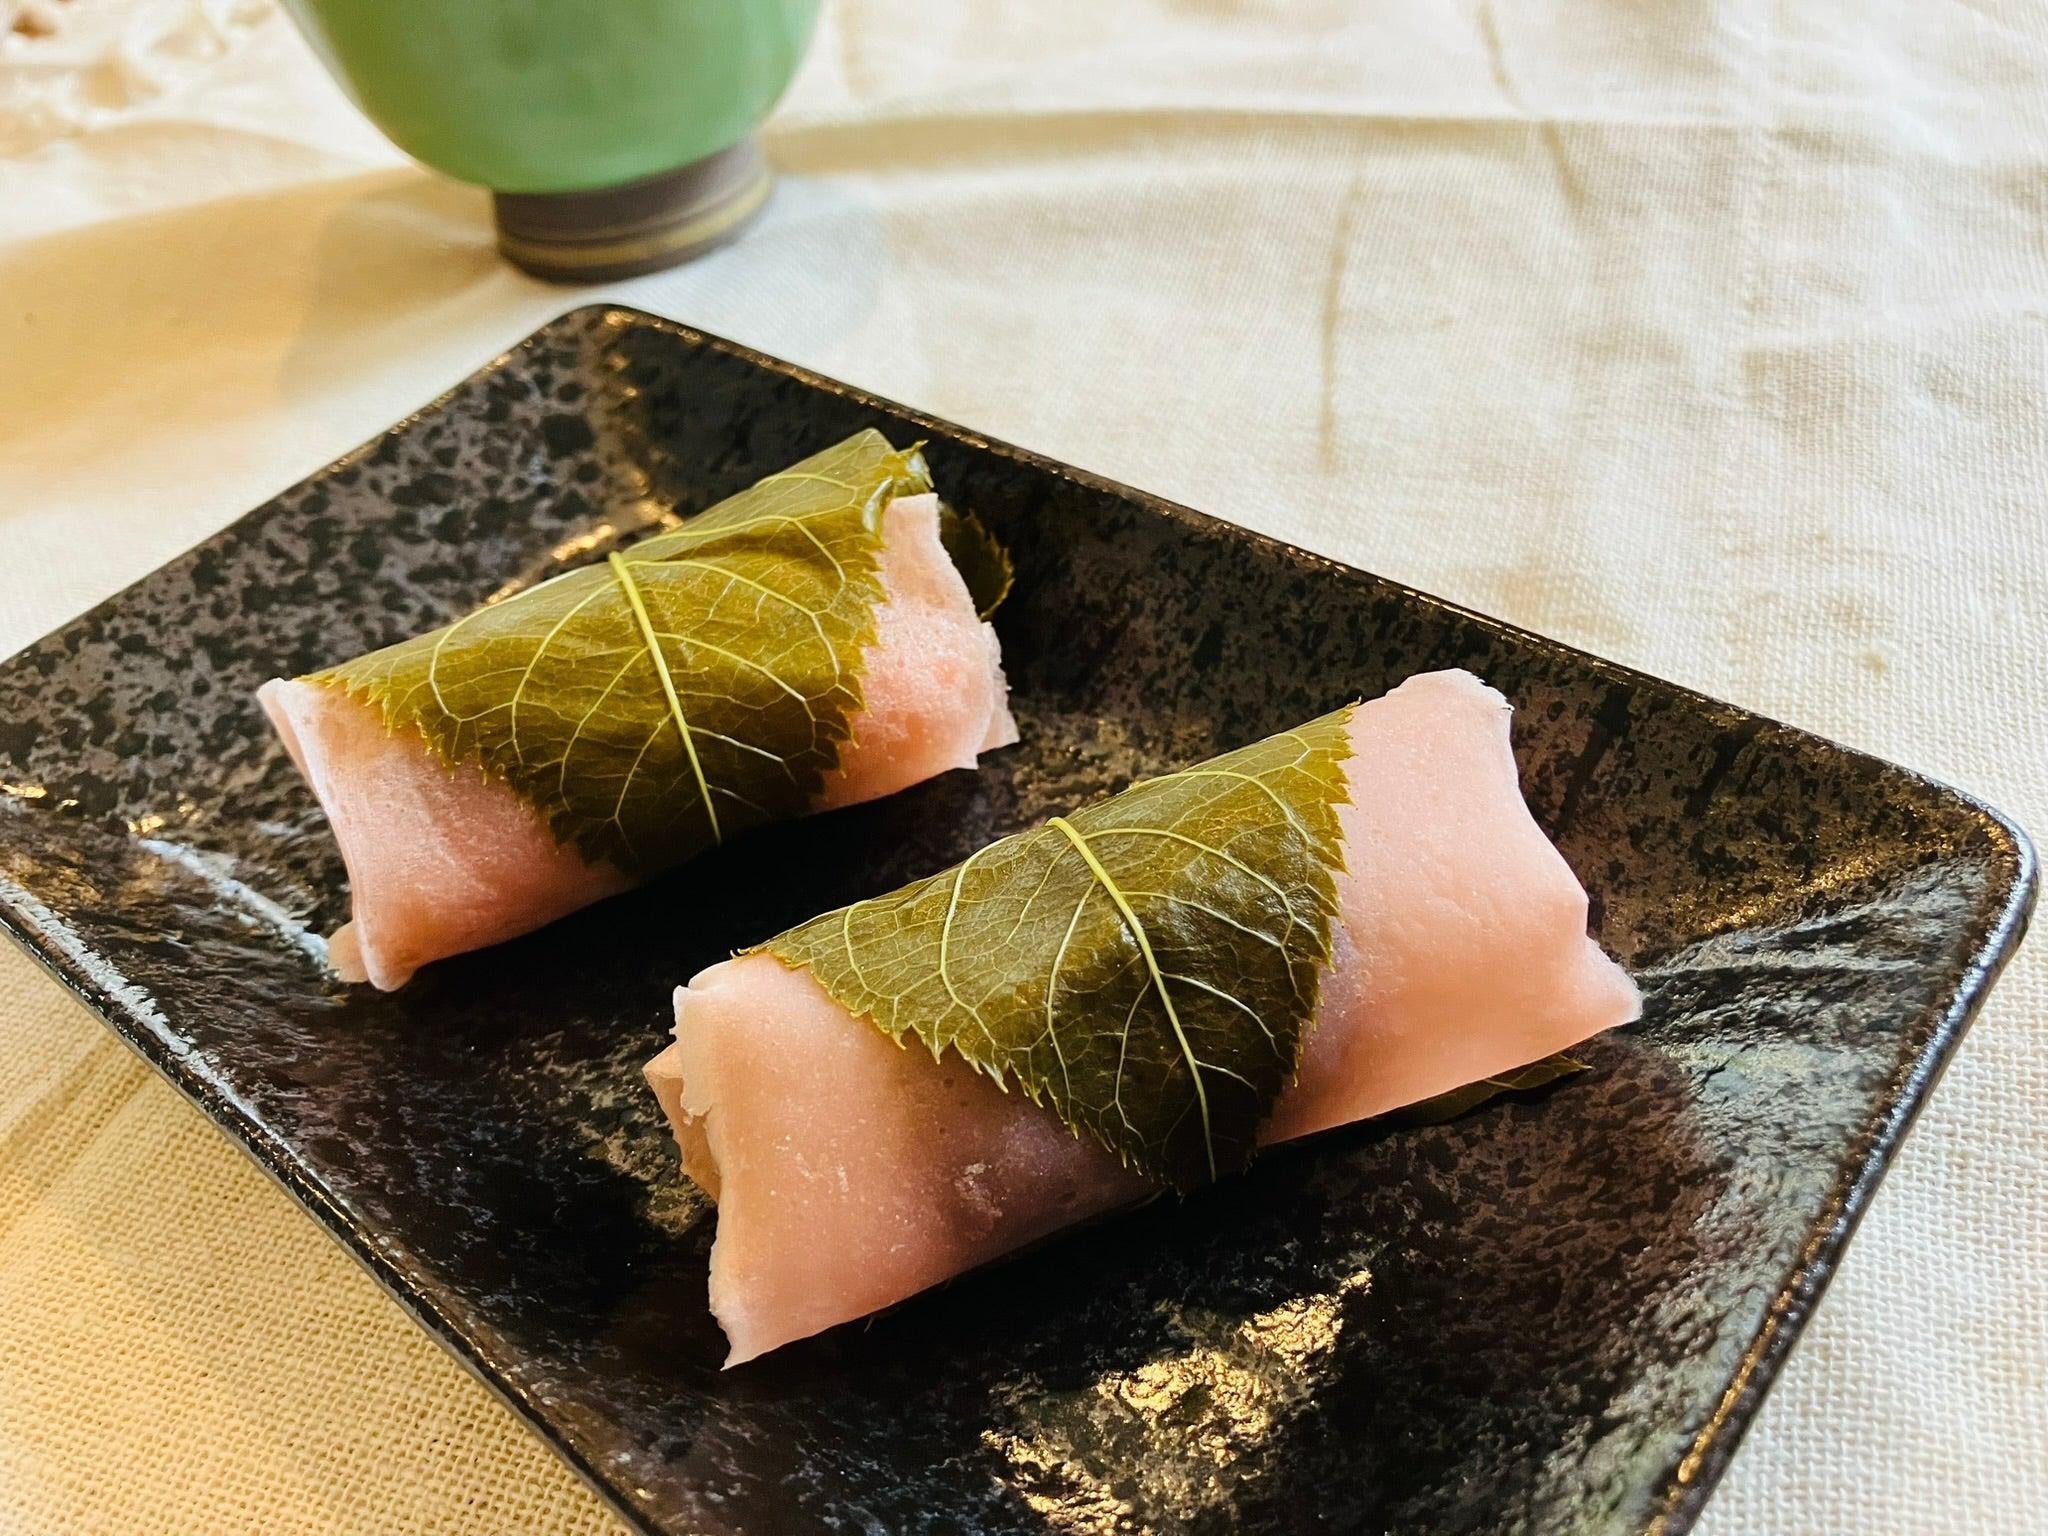 Kansai Style Sakura Mochi (Cherry Blossom Rice Cakes)